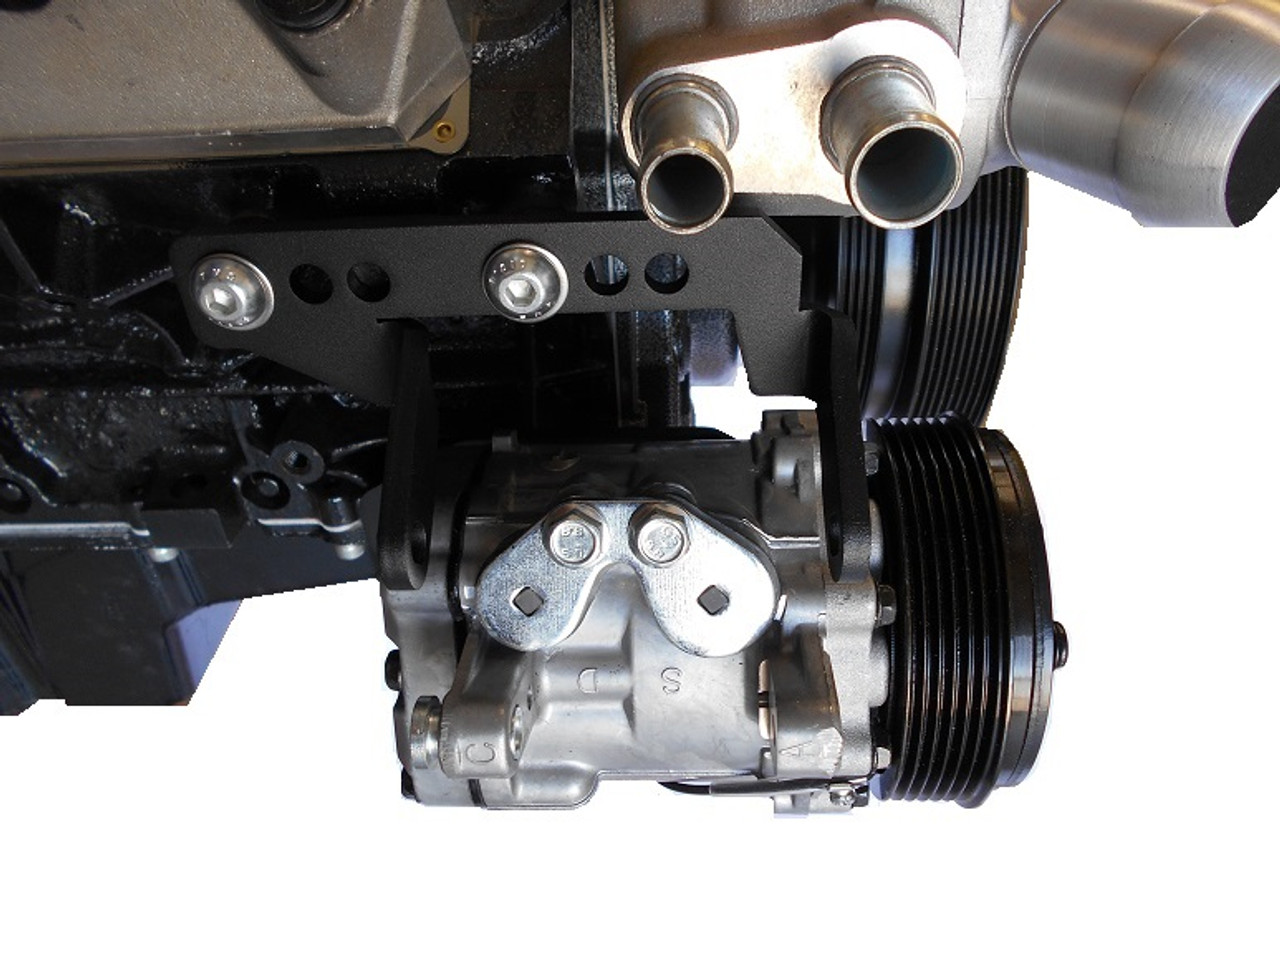 Dirty Dingo Low Mount AC Bracket for LS Engines - For Sanden SD7B10 Compressor